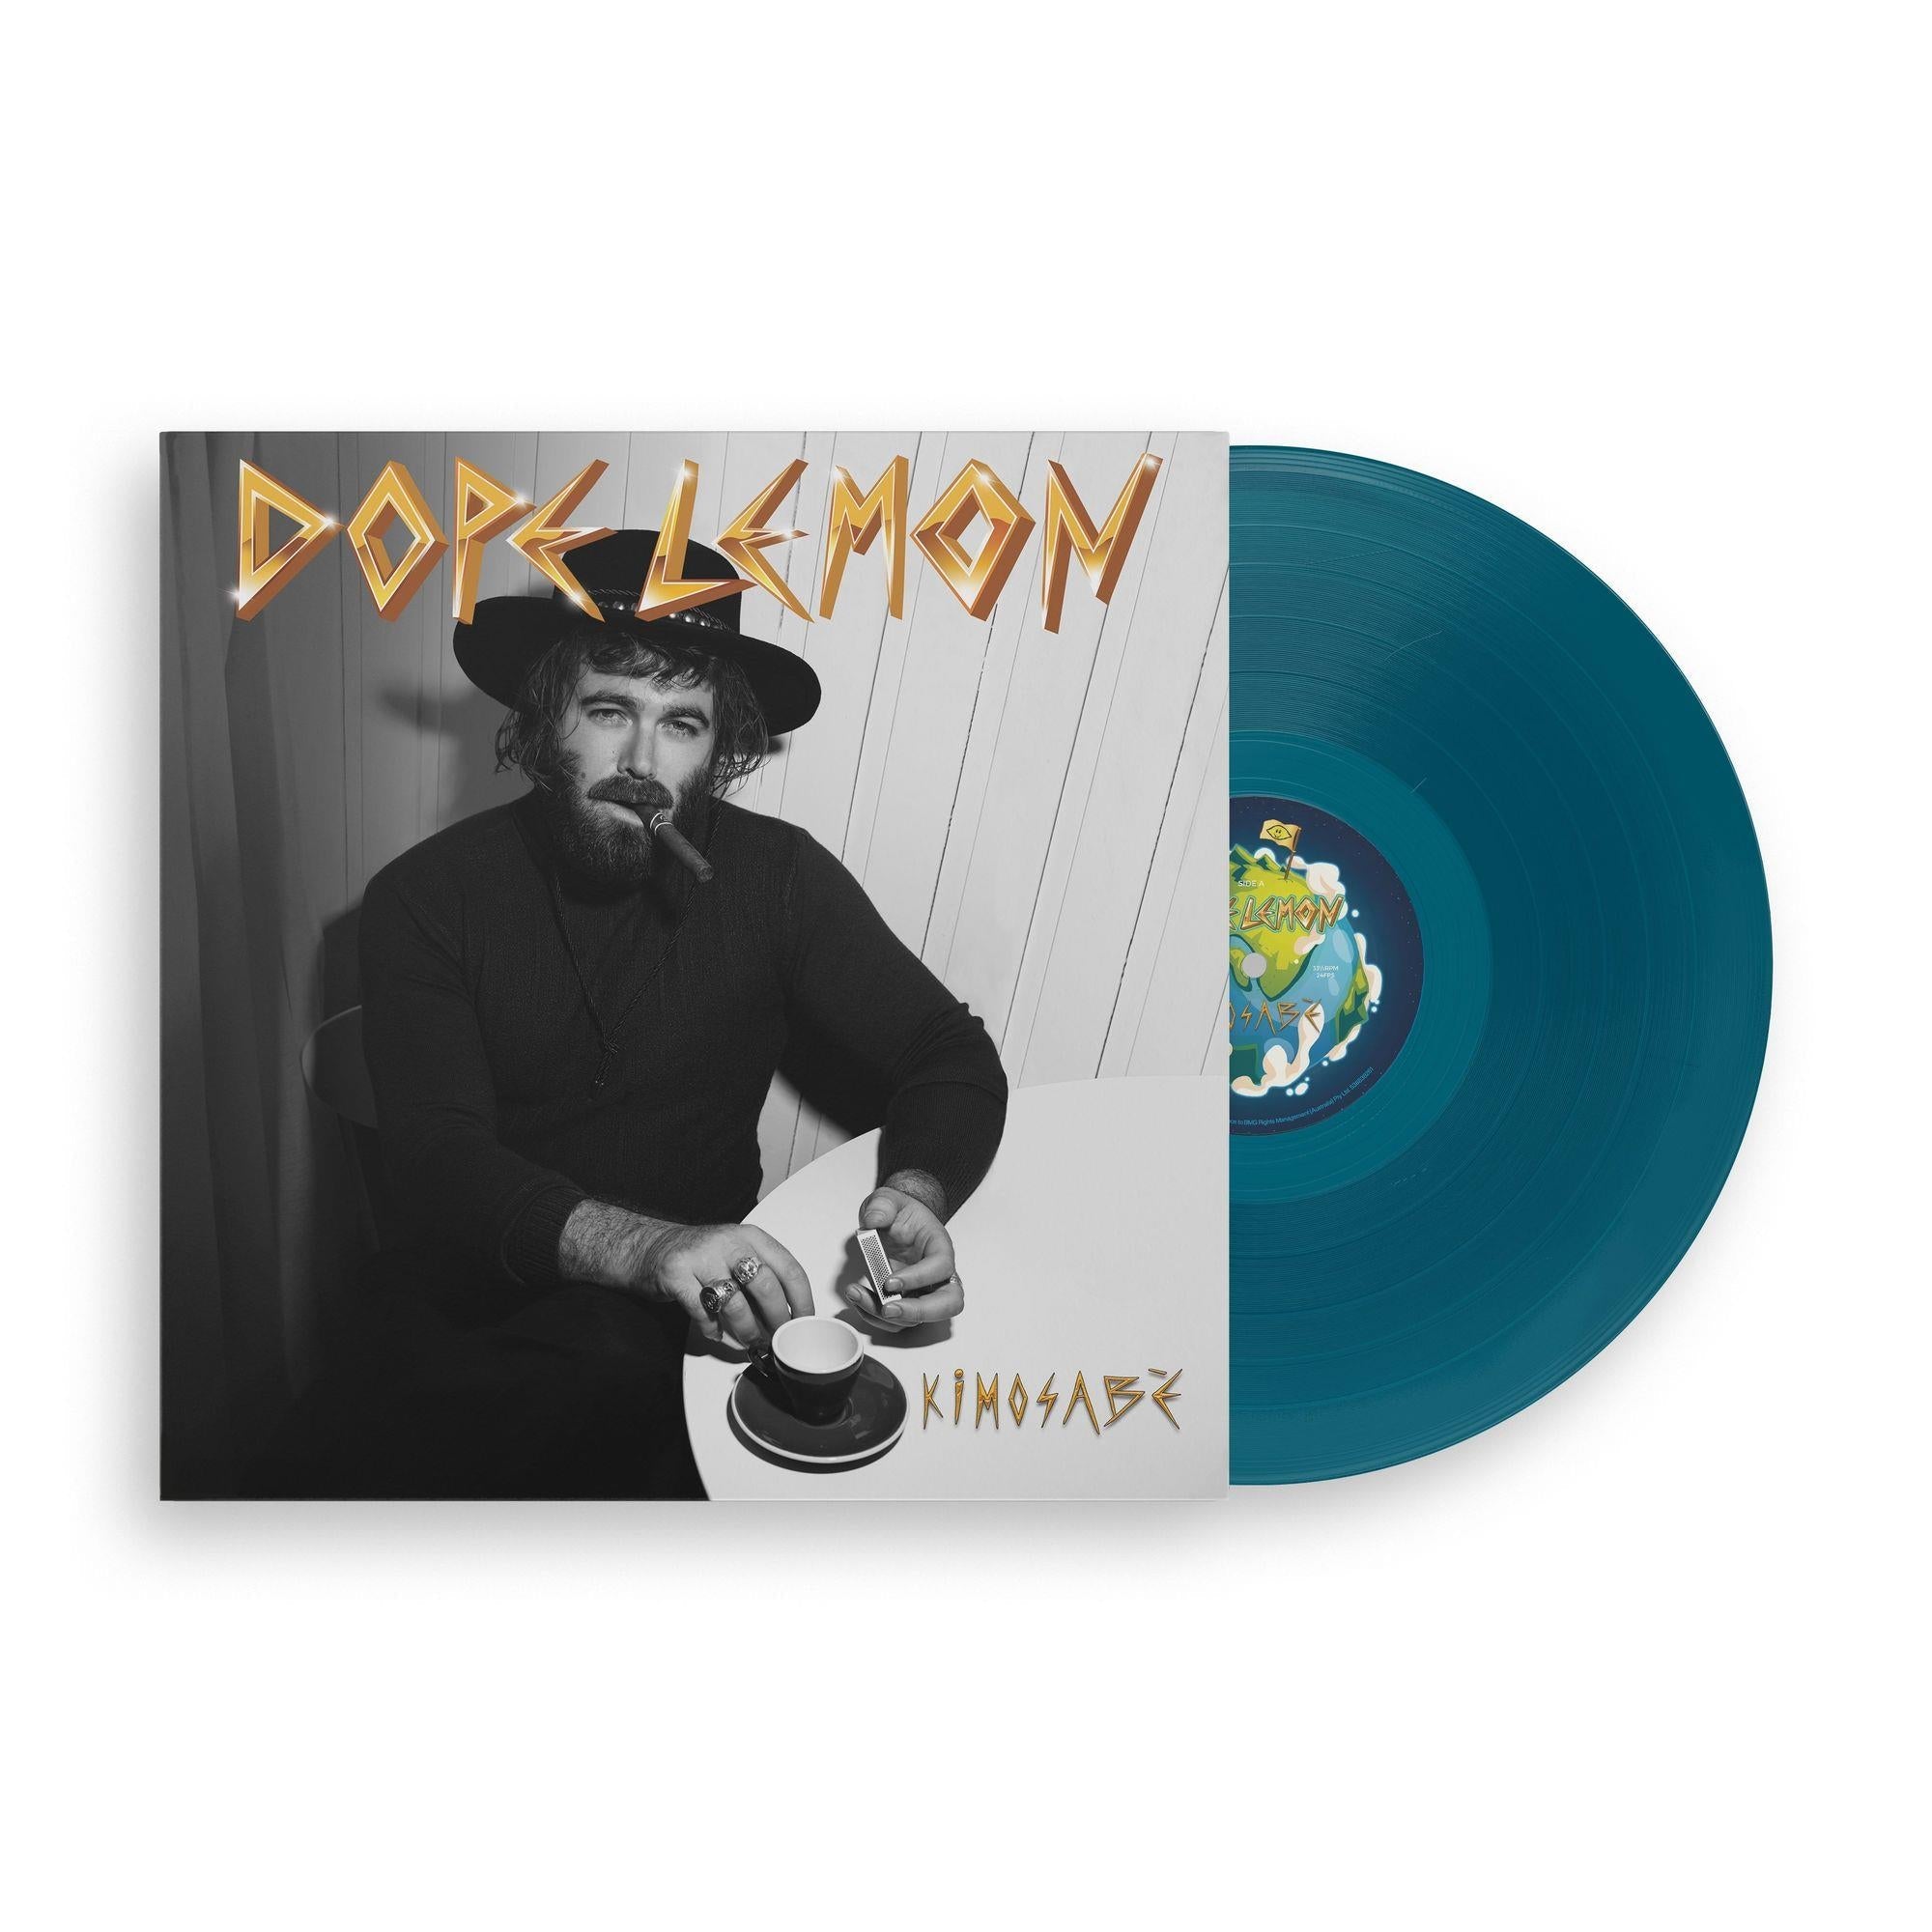 DOPE LEMON - KIMOSABE - LIMITED EDITION SEA BLUE VINYL LP - Wah Wah Records